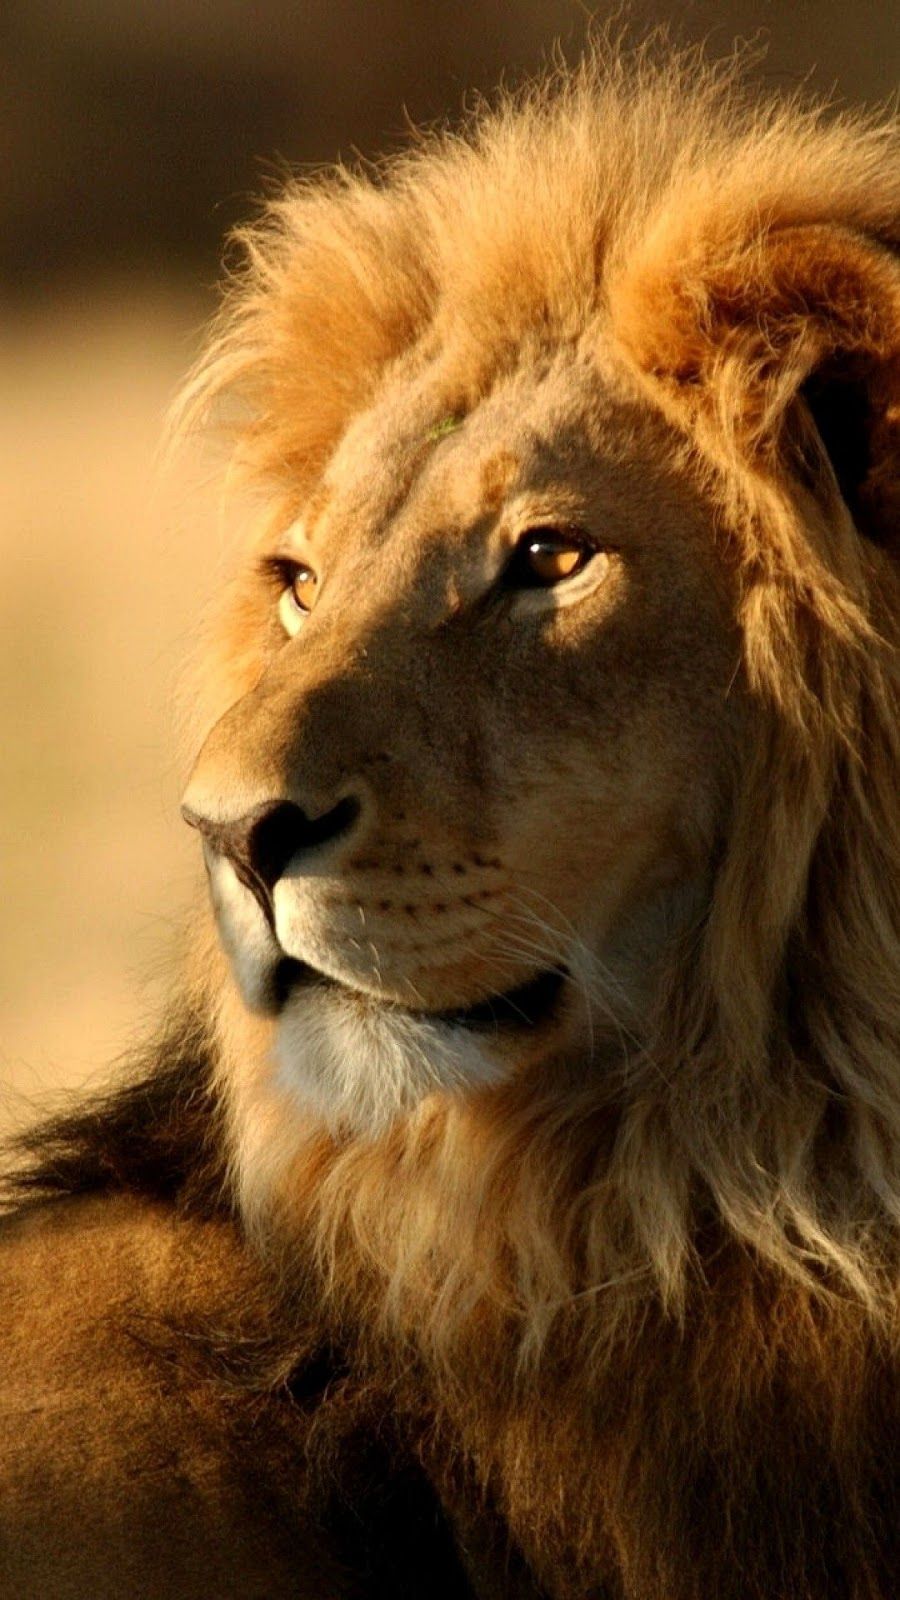 1080p HD Lion Wallpaper iPhone High Quality Desktop, iphone and android and Wallpaper. Animals Wallpaper HD. Animals, Animals beautiful, Lions